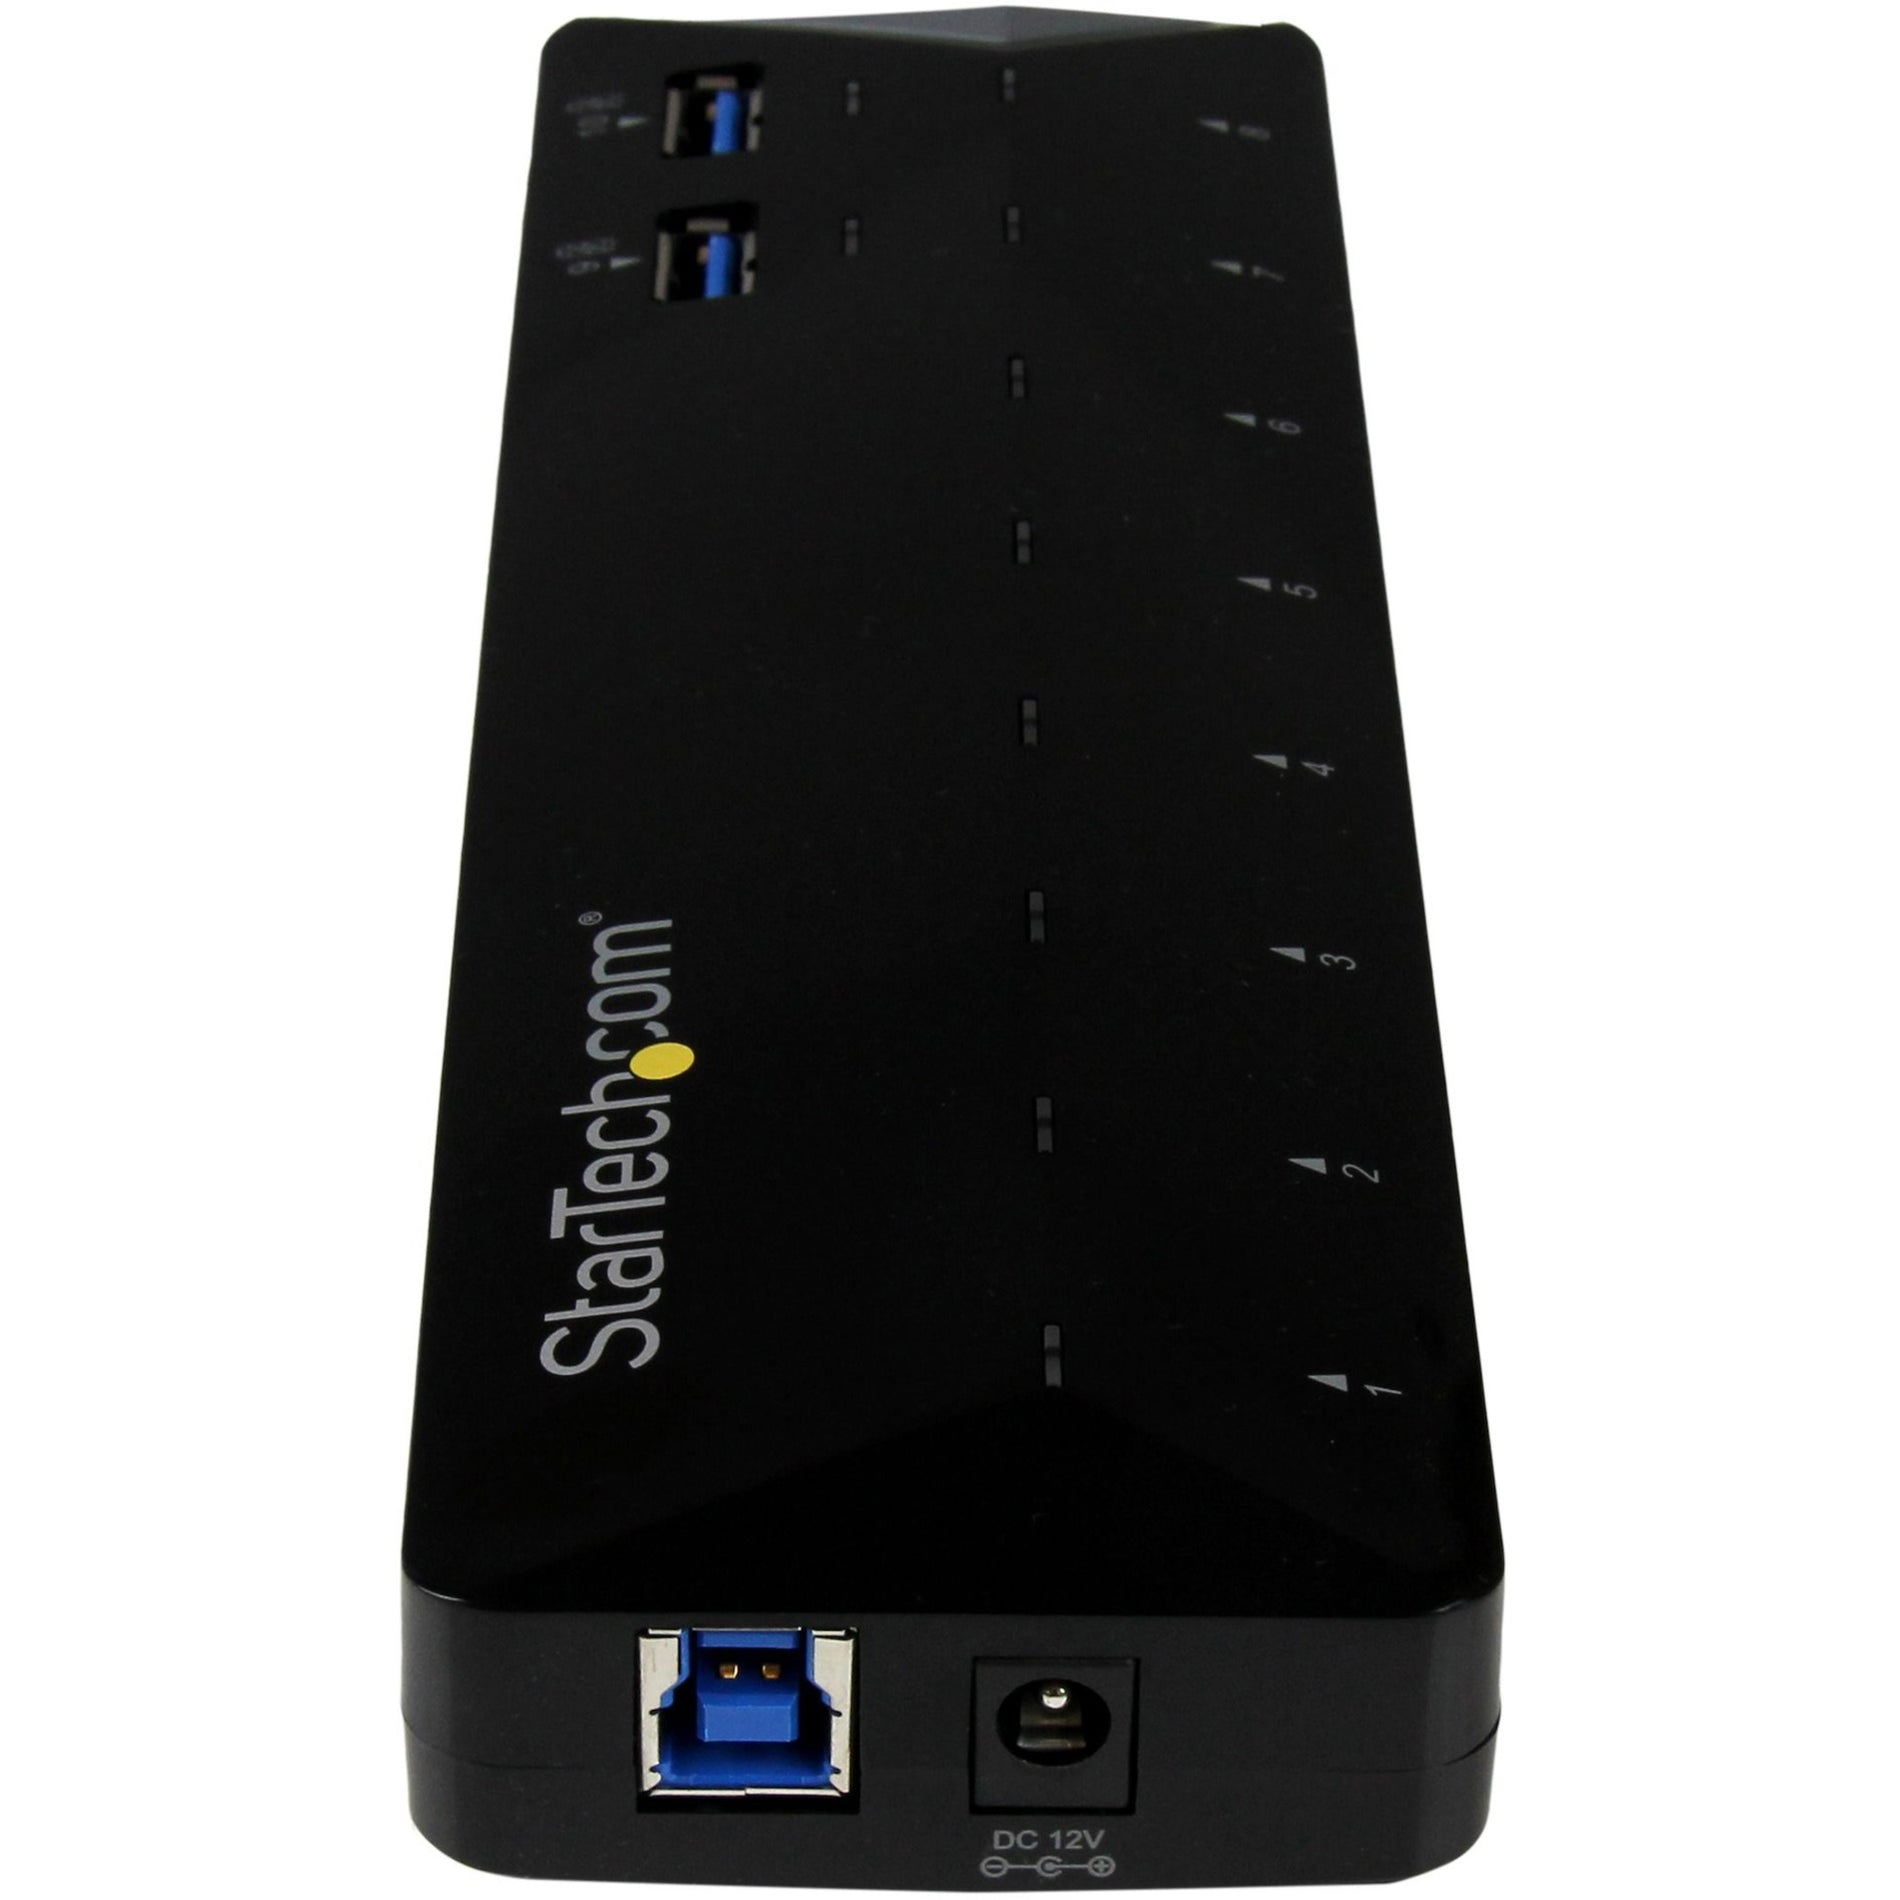 StarTech.com ST103008U2C 10-端口 USB 3.0 集线器，具有充电和同步端口，快速充电站，黑色 星美科技 戴硬科技